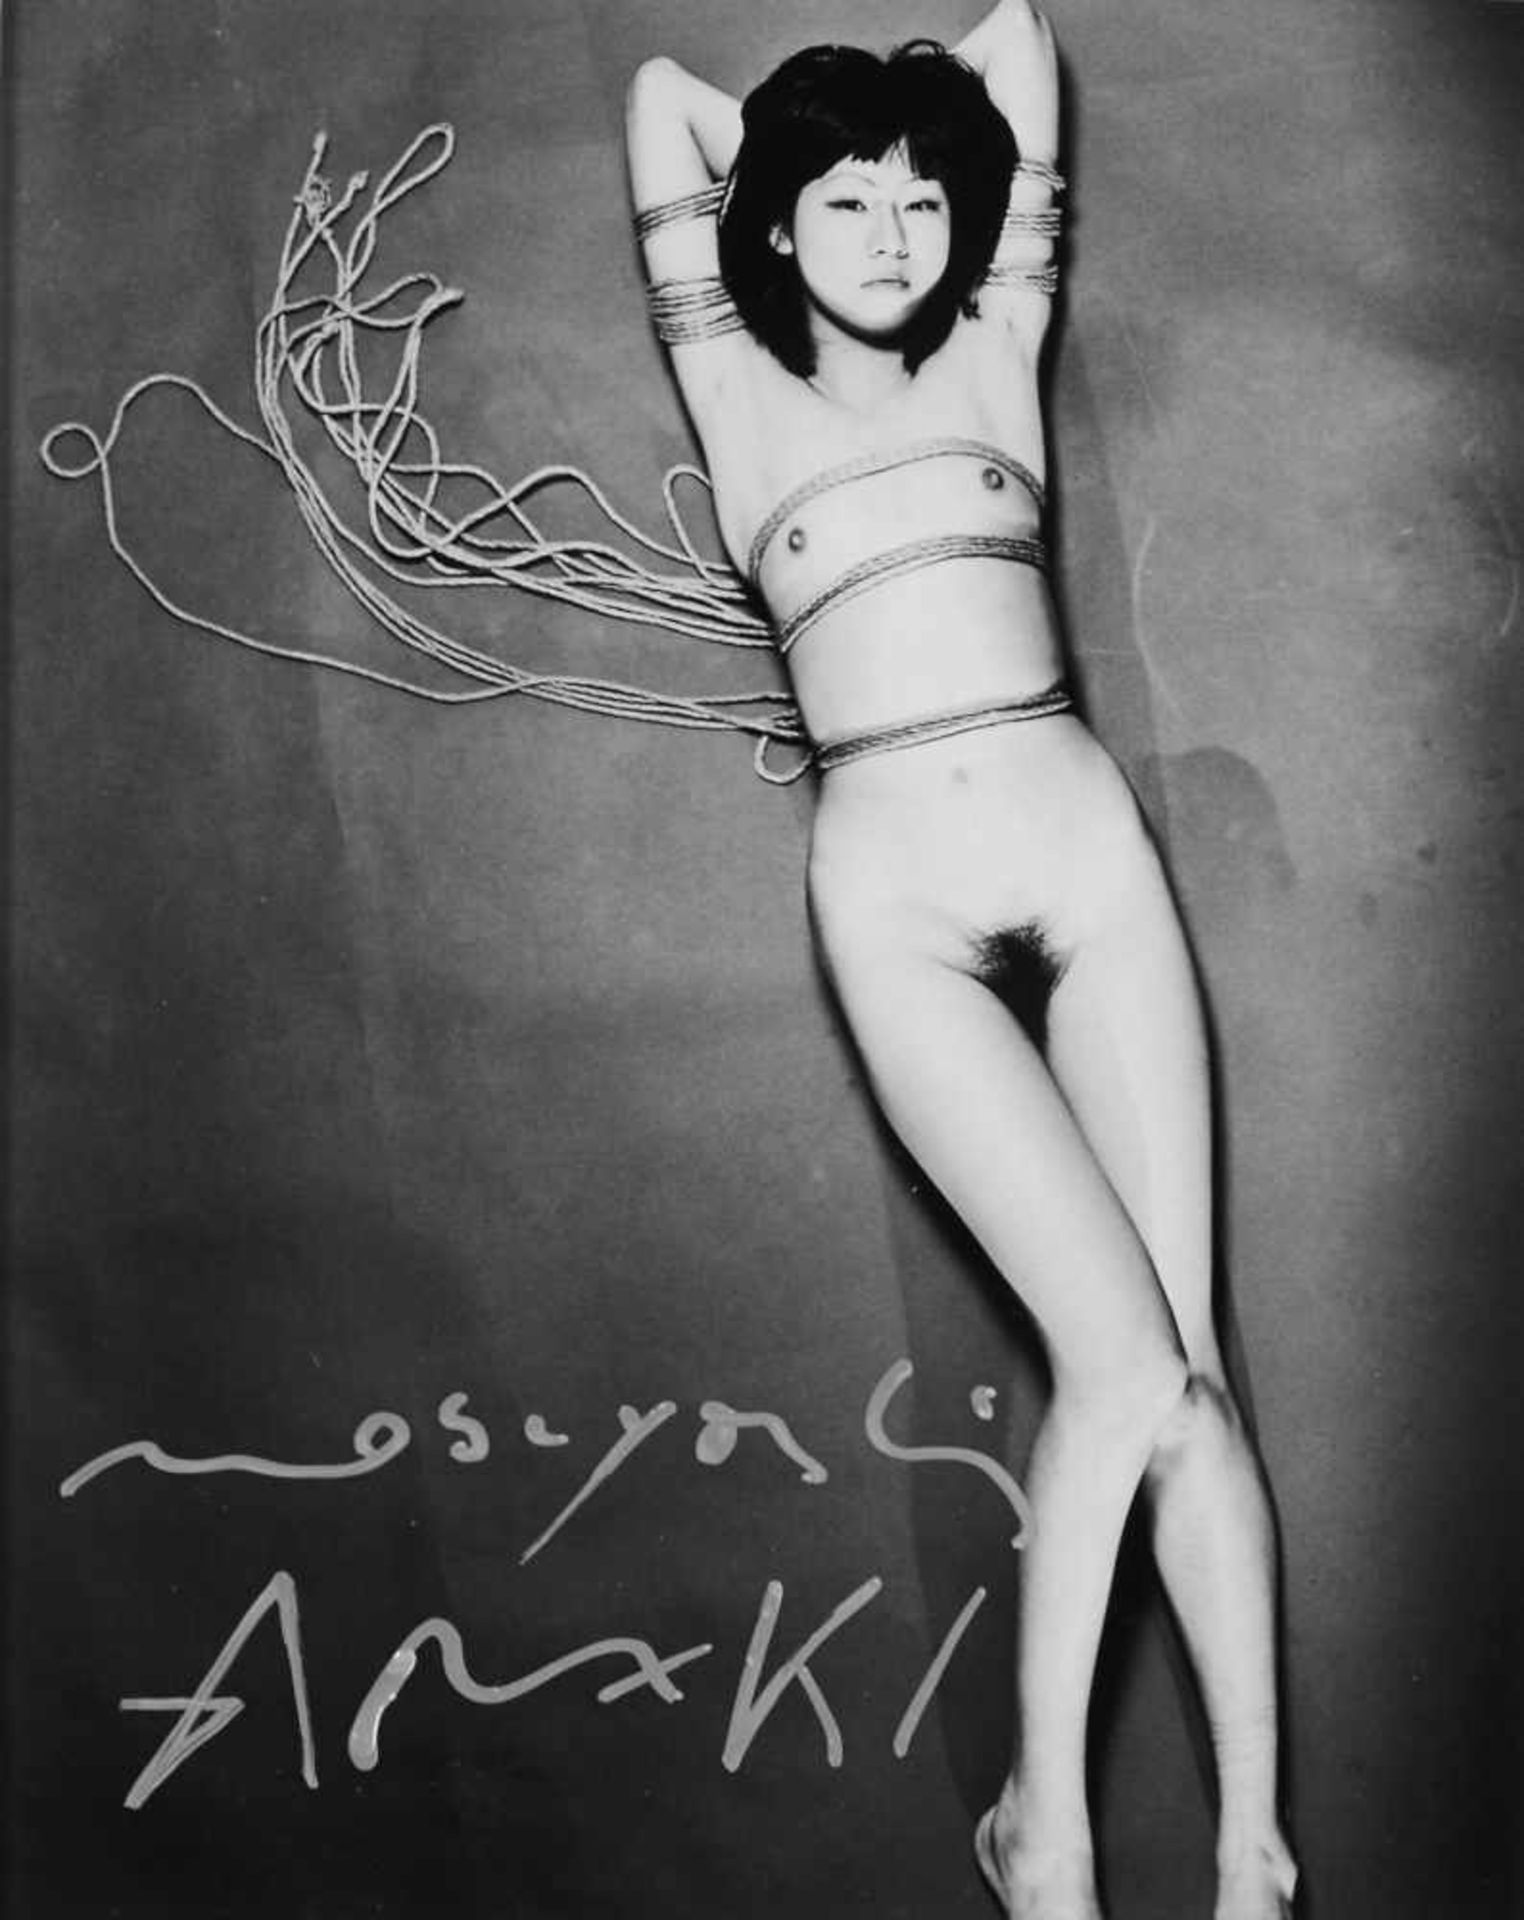 Photographie- Araki, Nobuyoshi (geboren 1940),Kinbaku. Photographie. E. sign., nicht bezeichnet